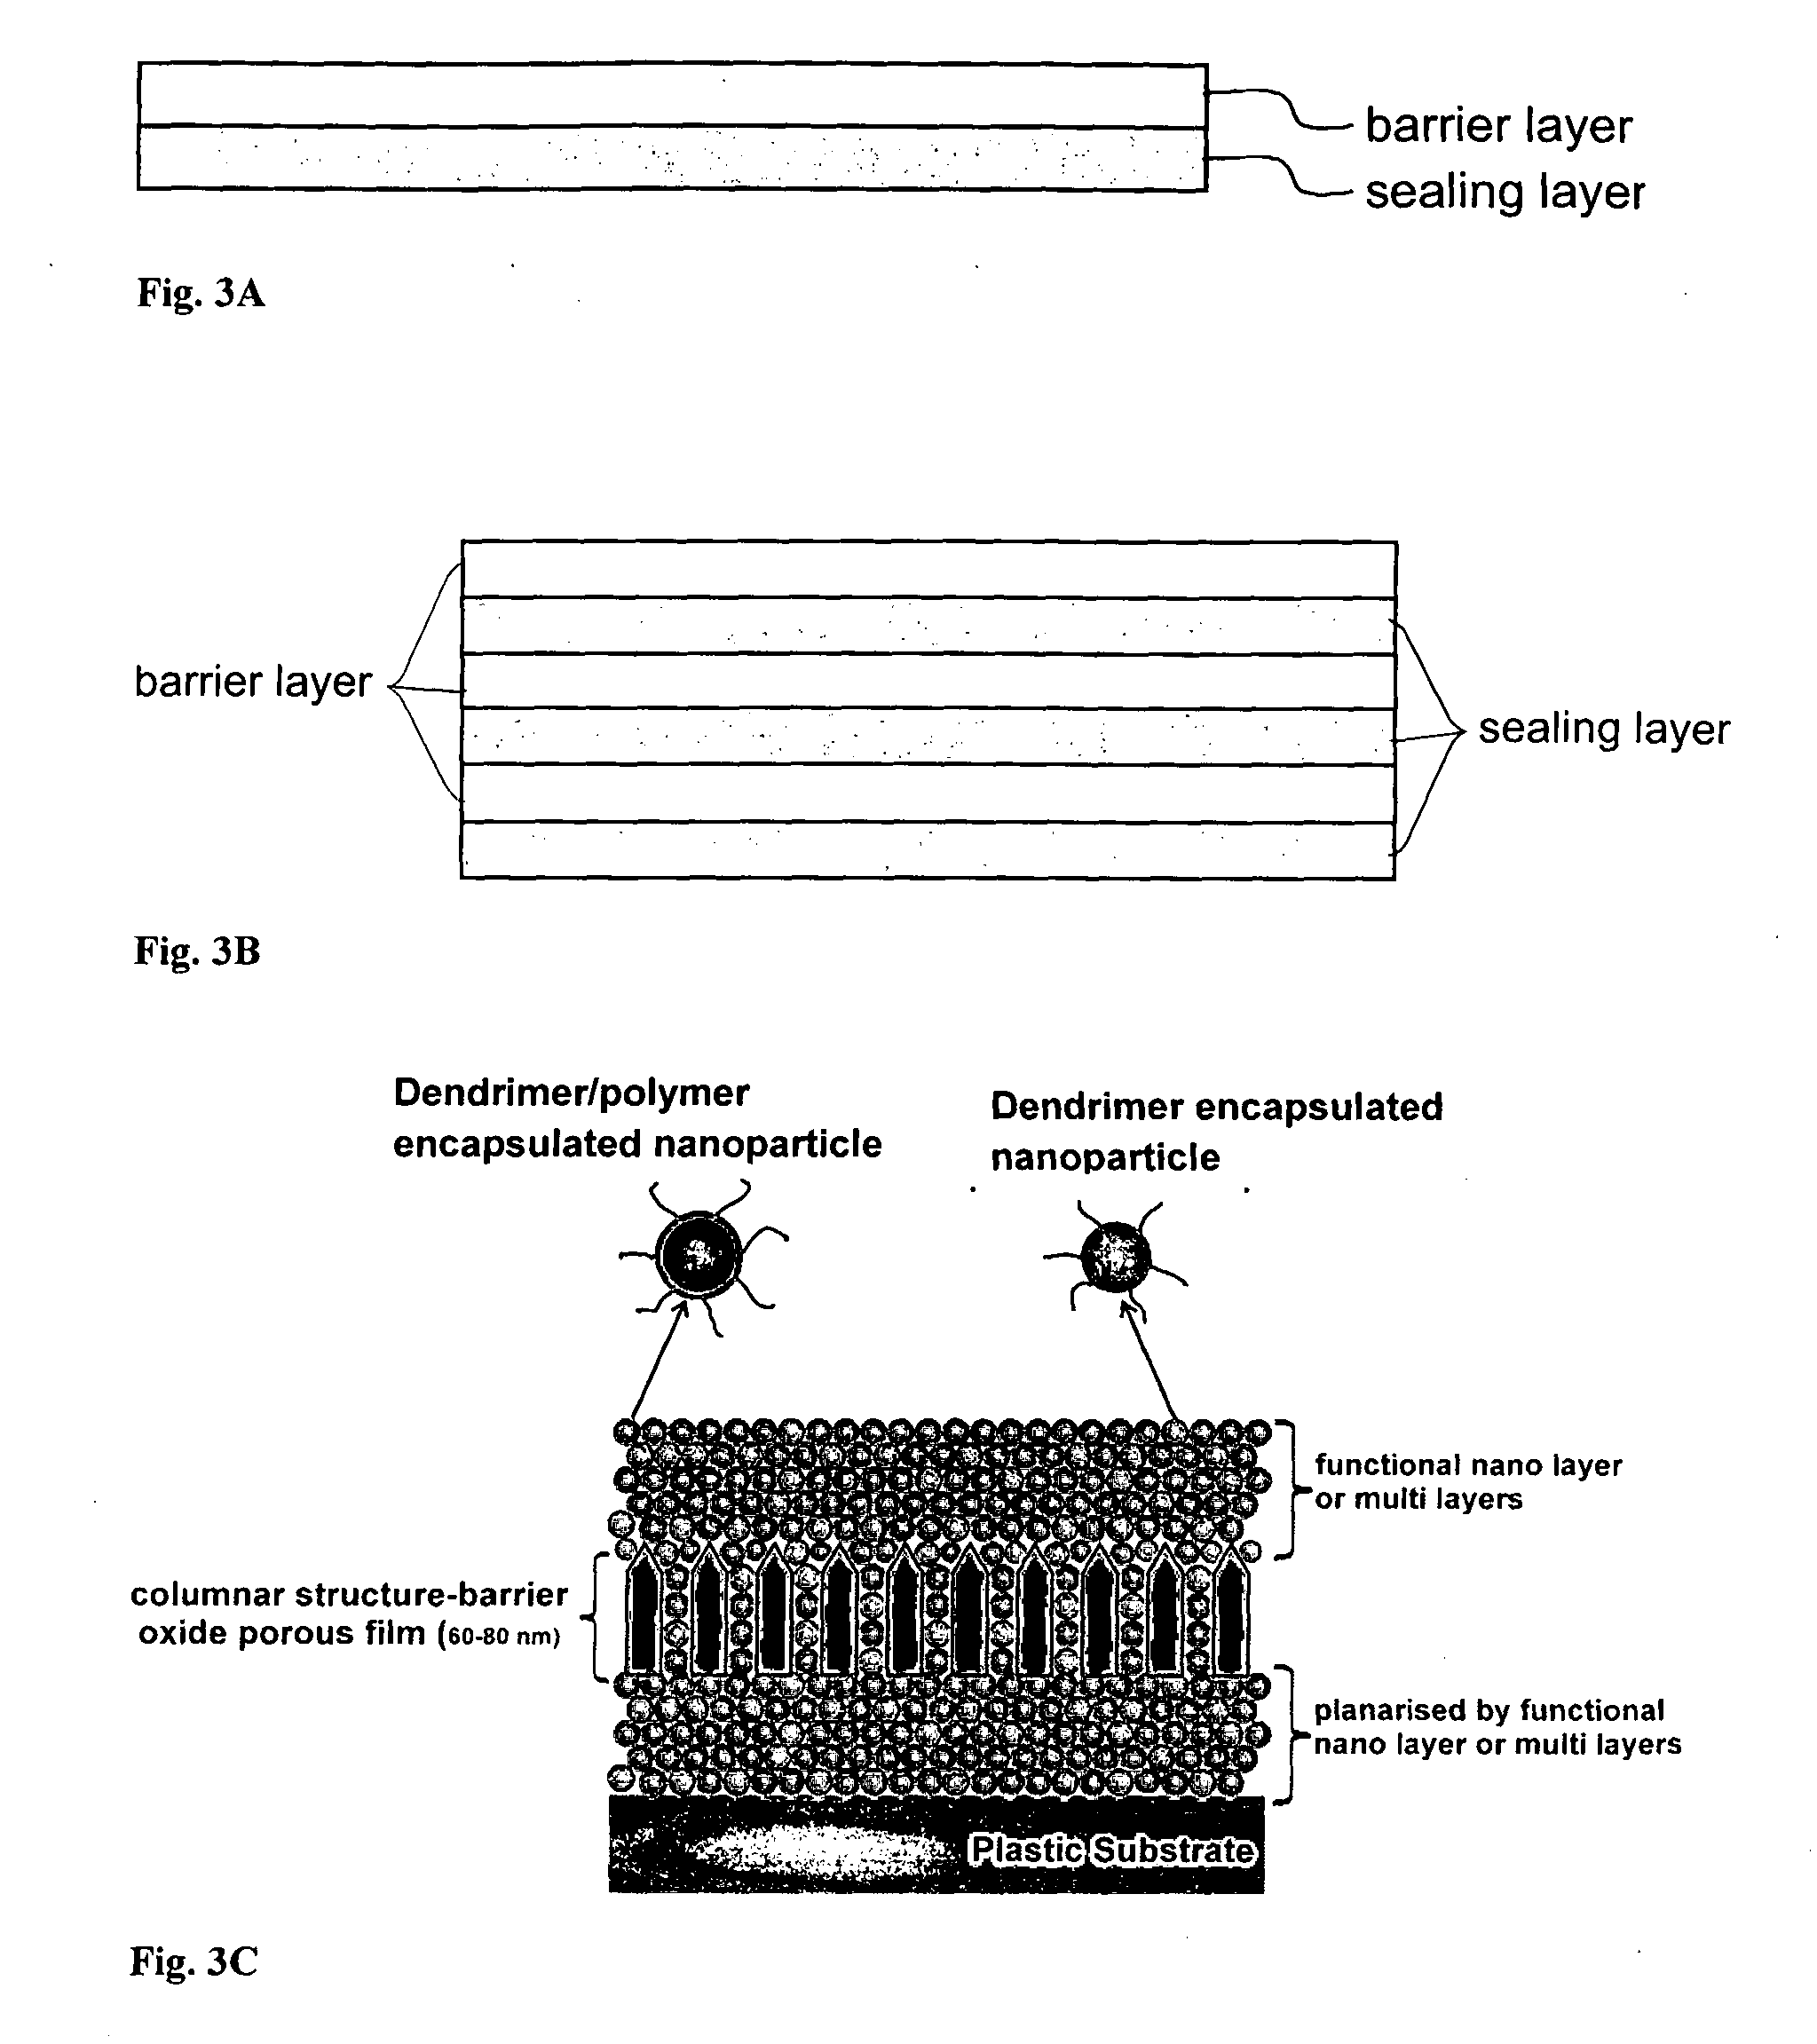 Encapsulation barrier stack comprising dendrimer encapsulated nanop articles